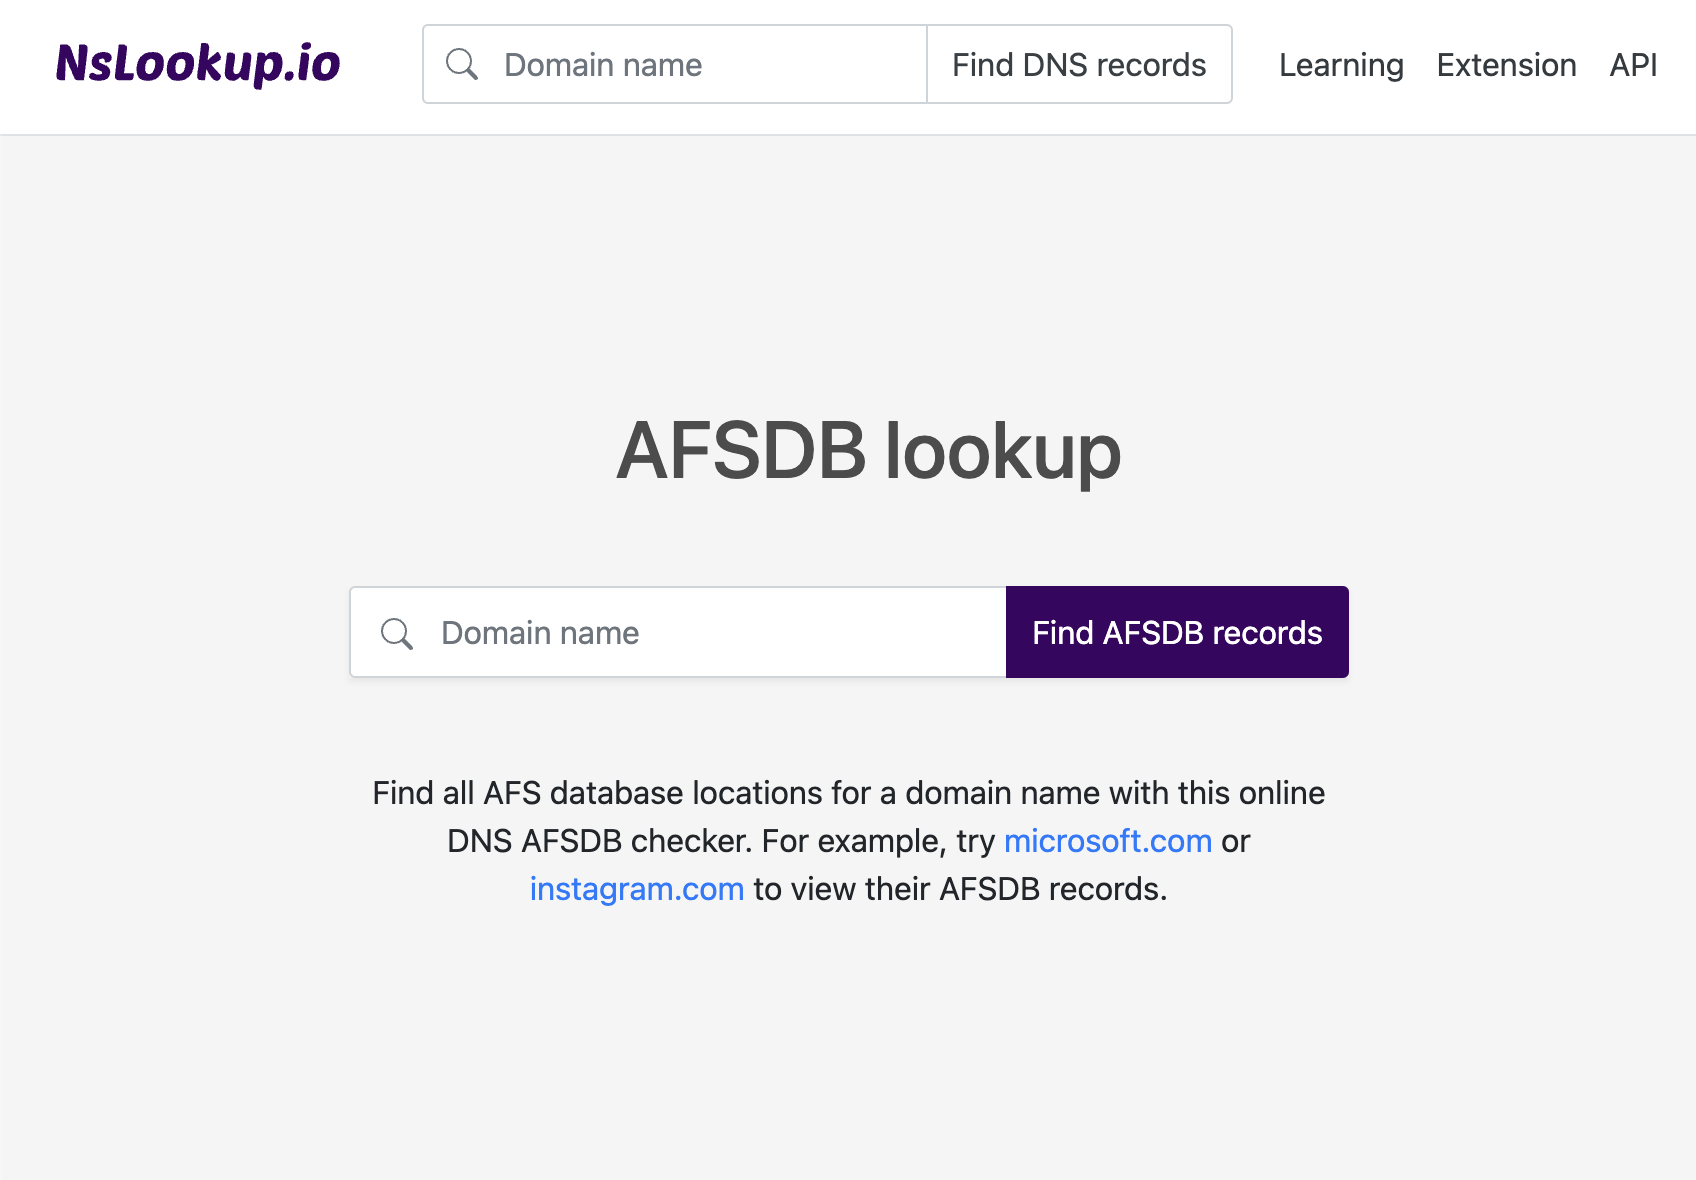 Open the AFSDB lookup tool